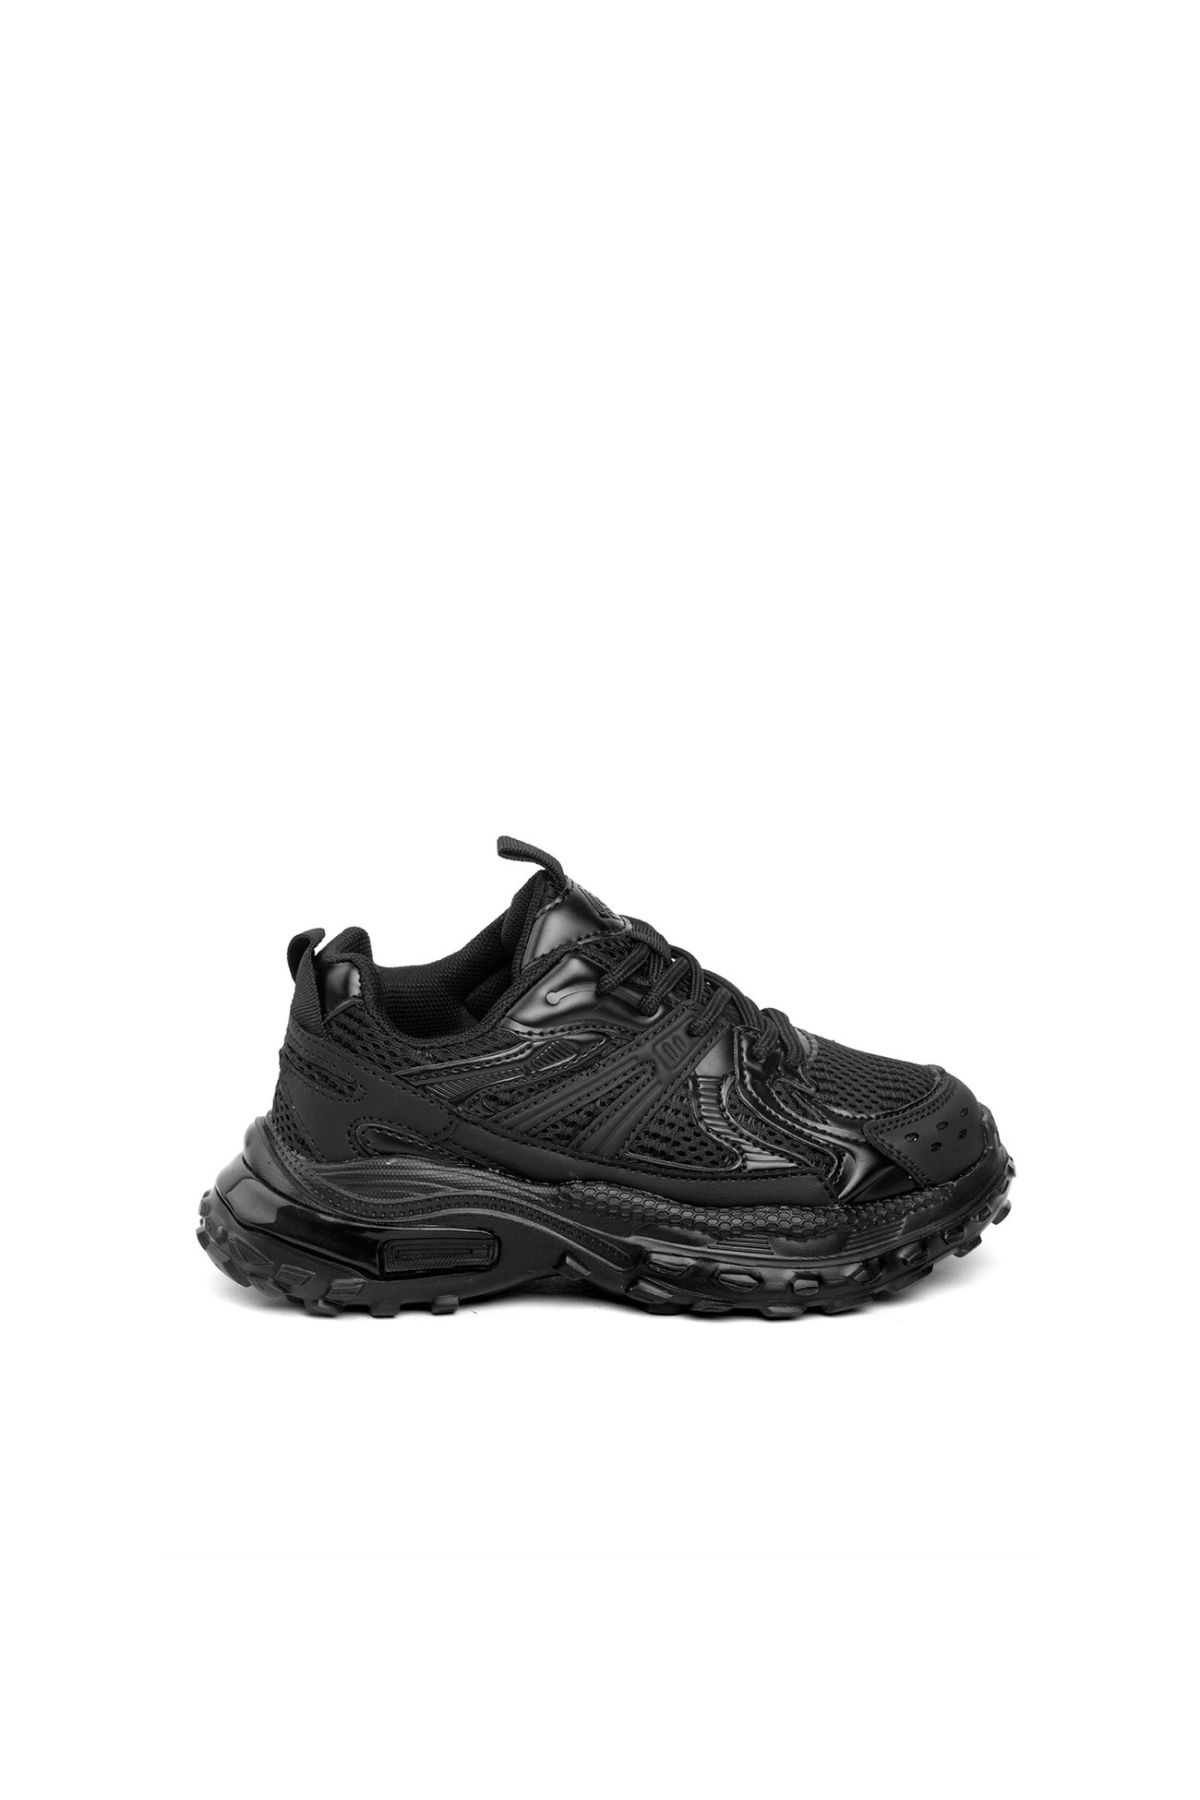 pepino FY24-1682 Çocuk Spor Ayakkabısı Siyah